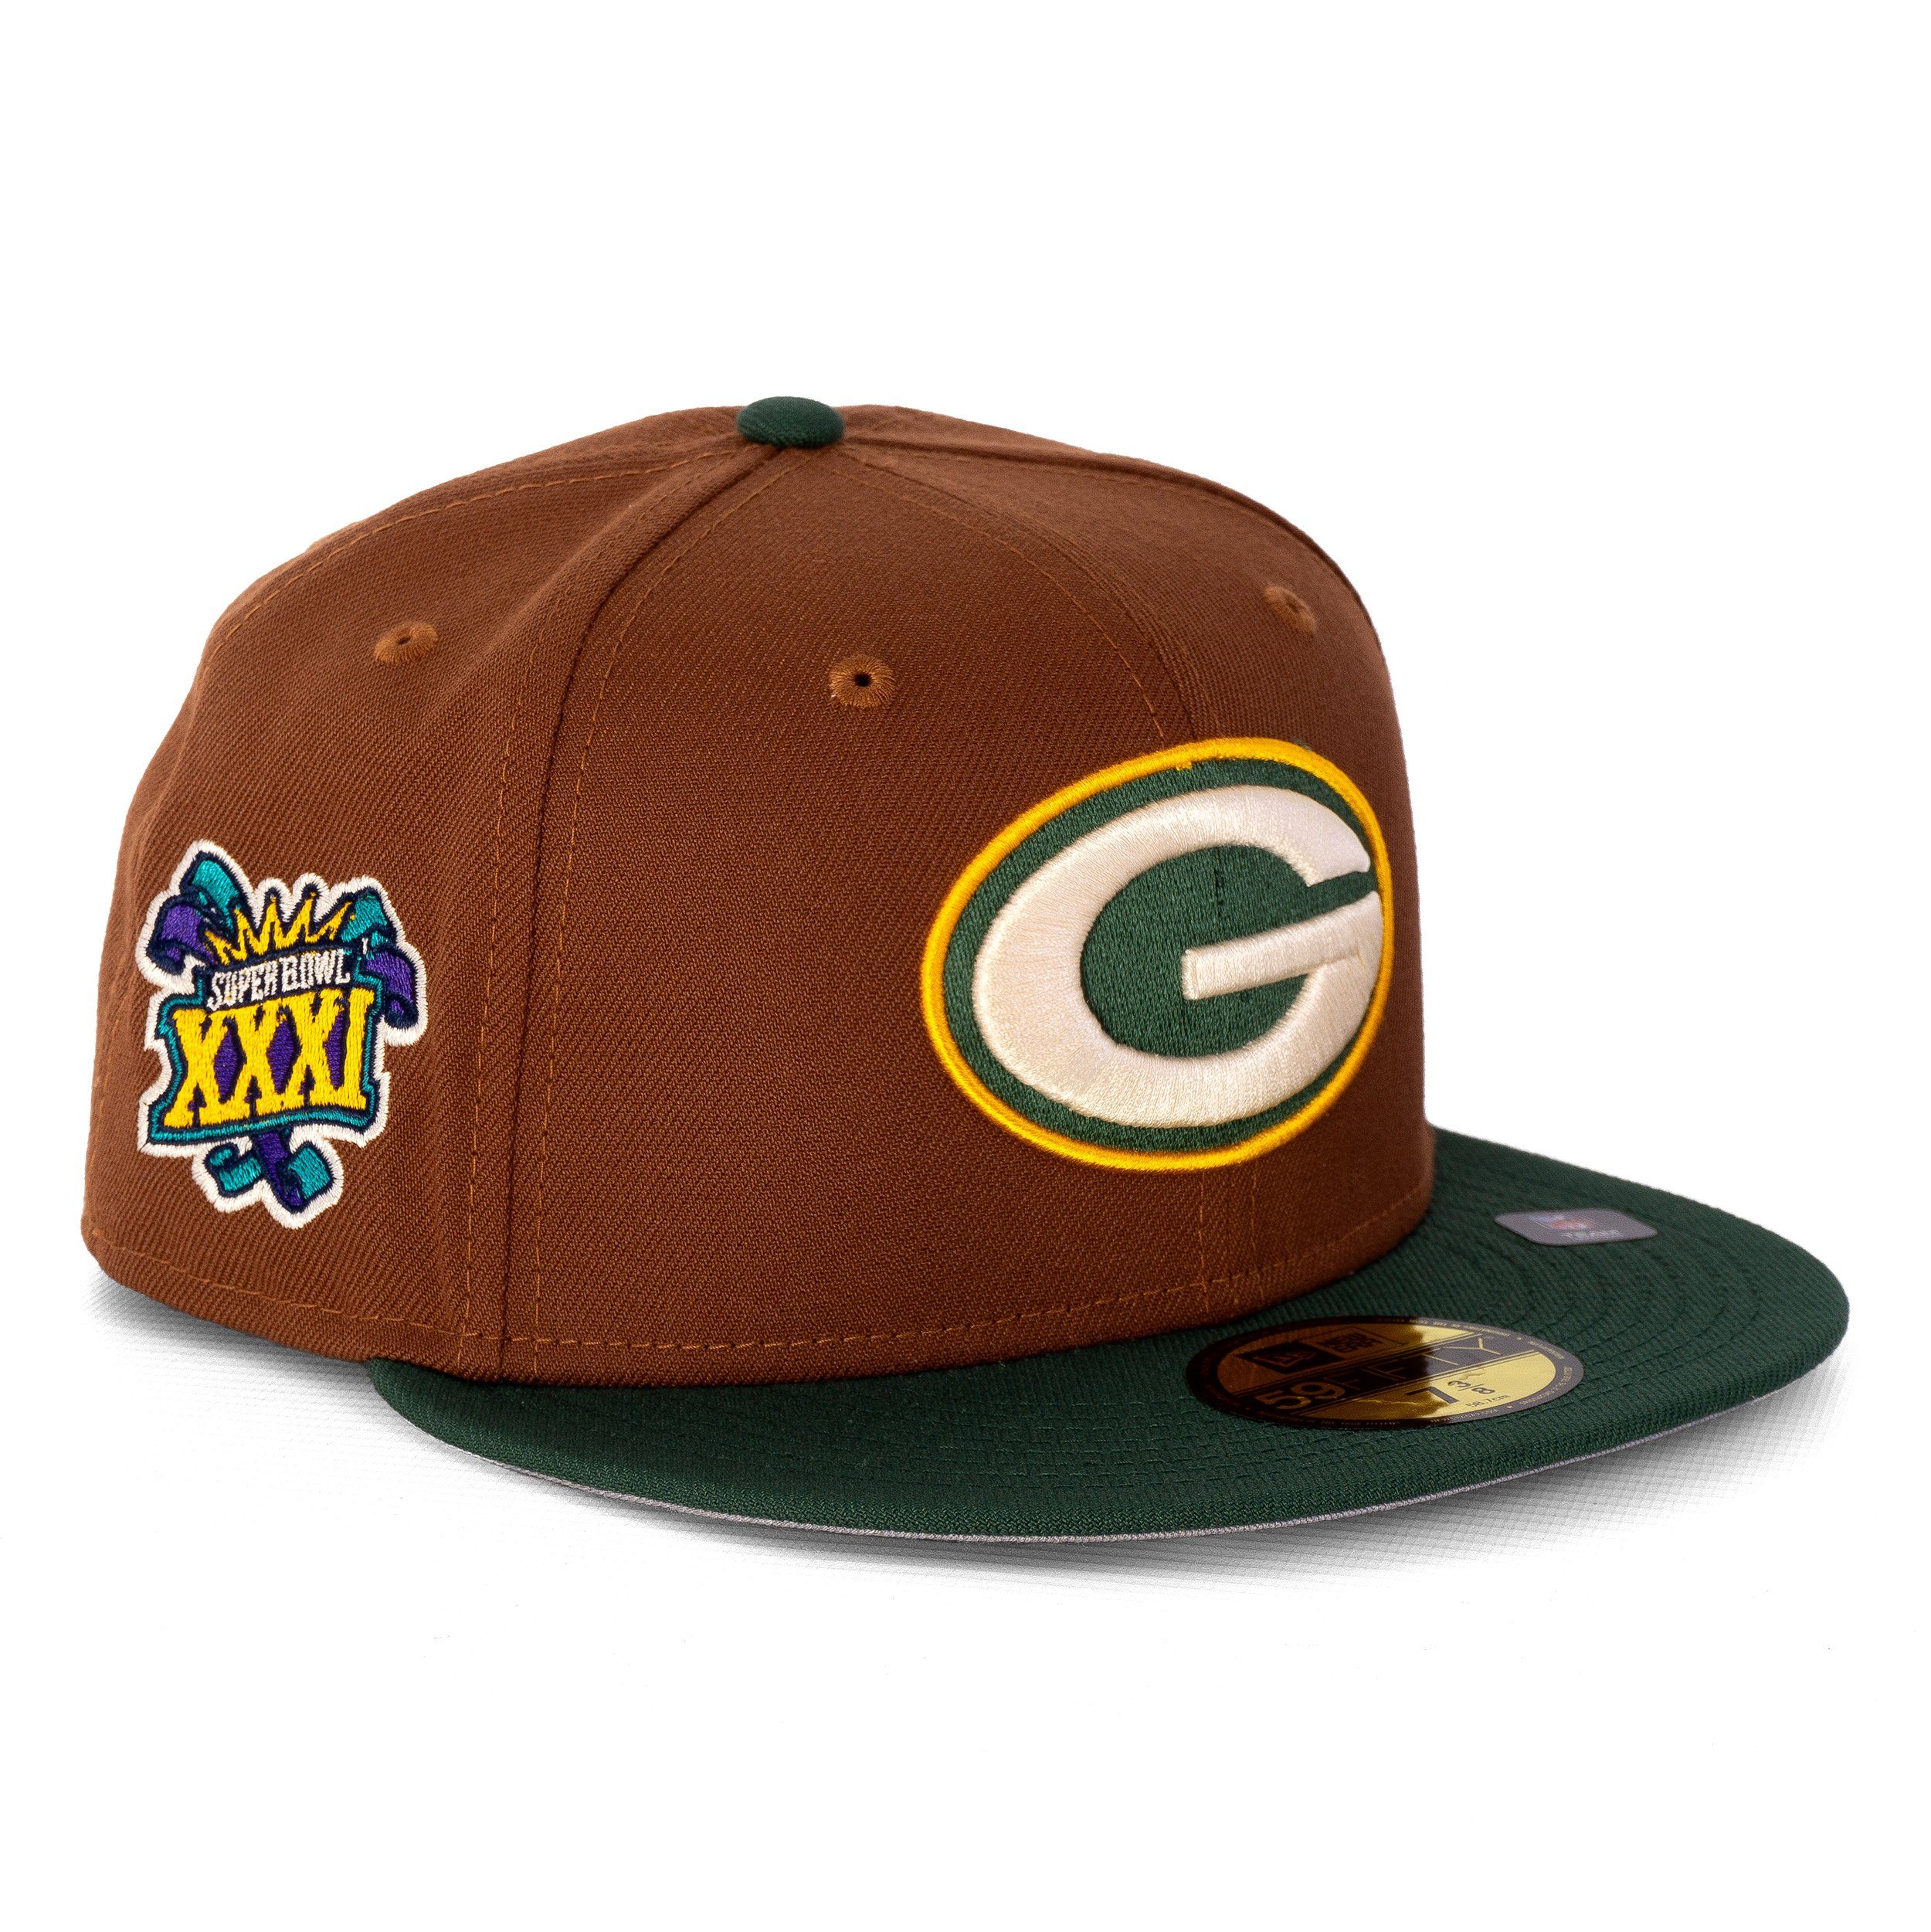 Green New New Cap (1-St) Baseball Bay Packers Harvest Era Cap Era